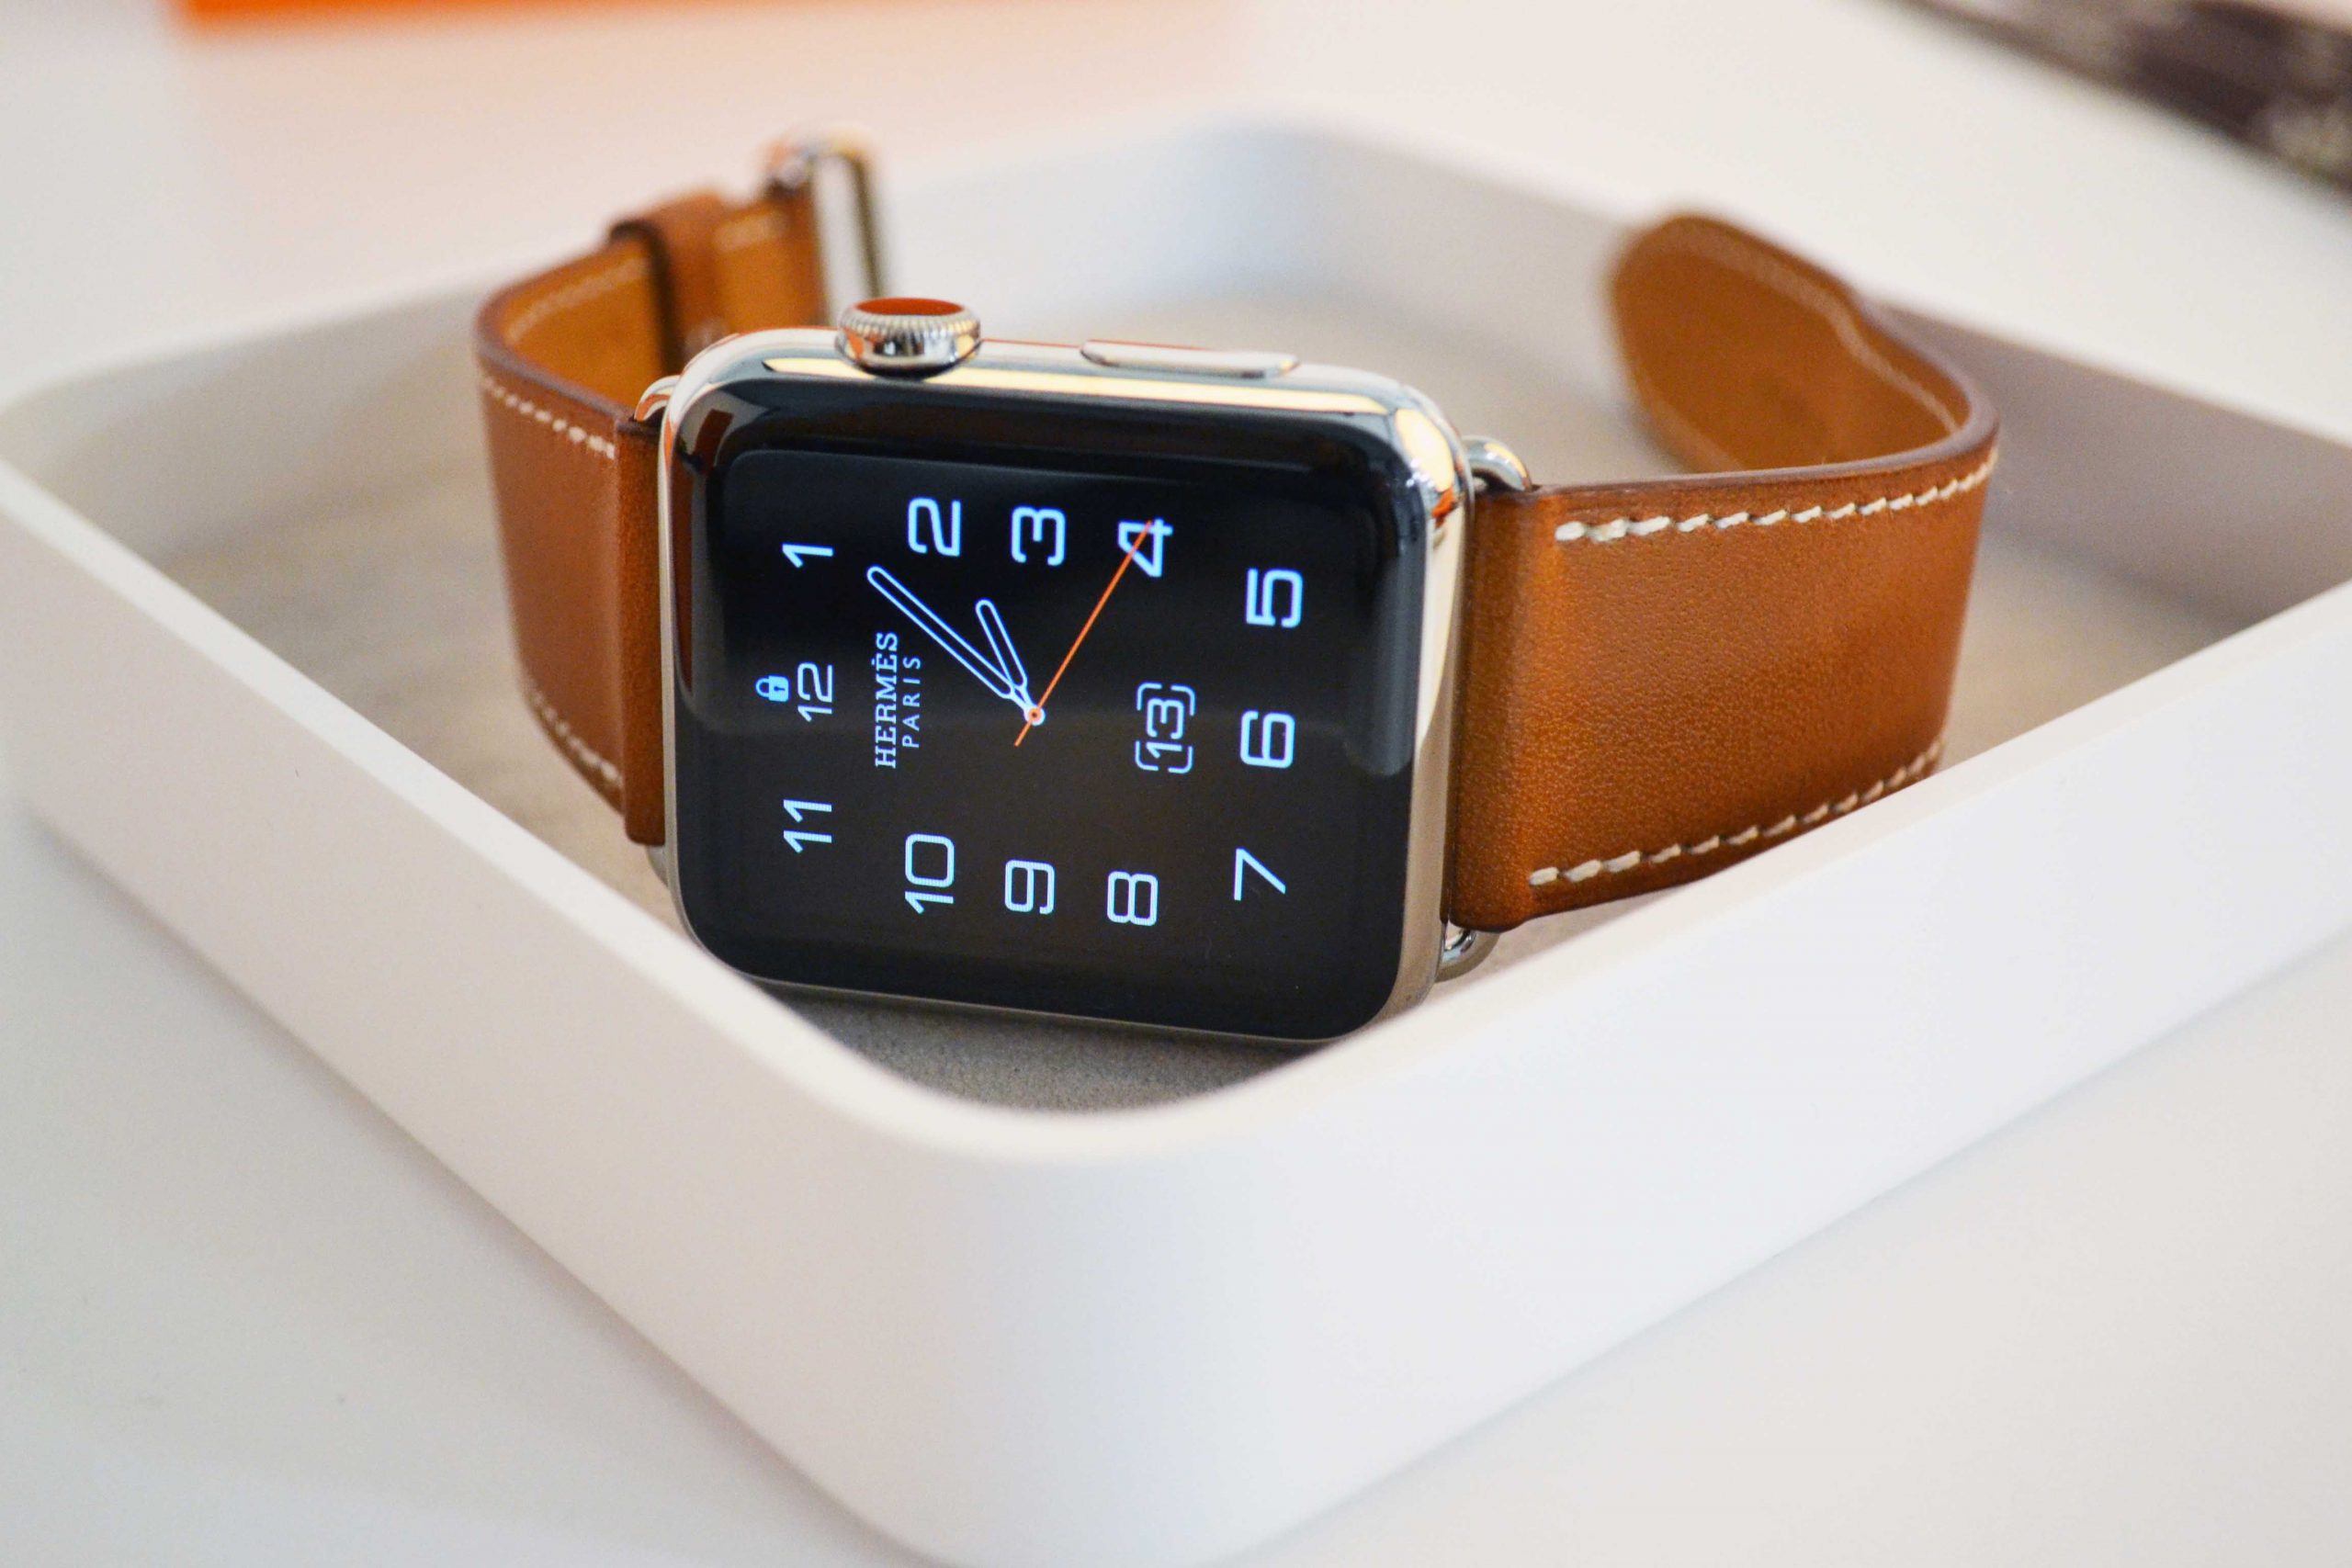 Hermès Apple Watch Review 2 2015